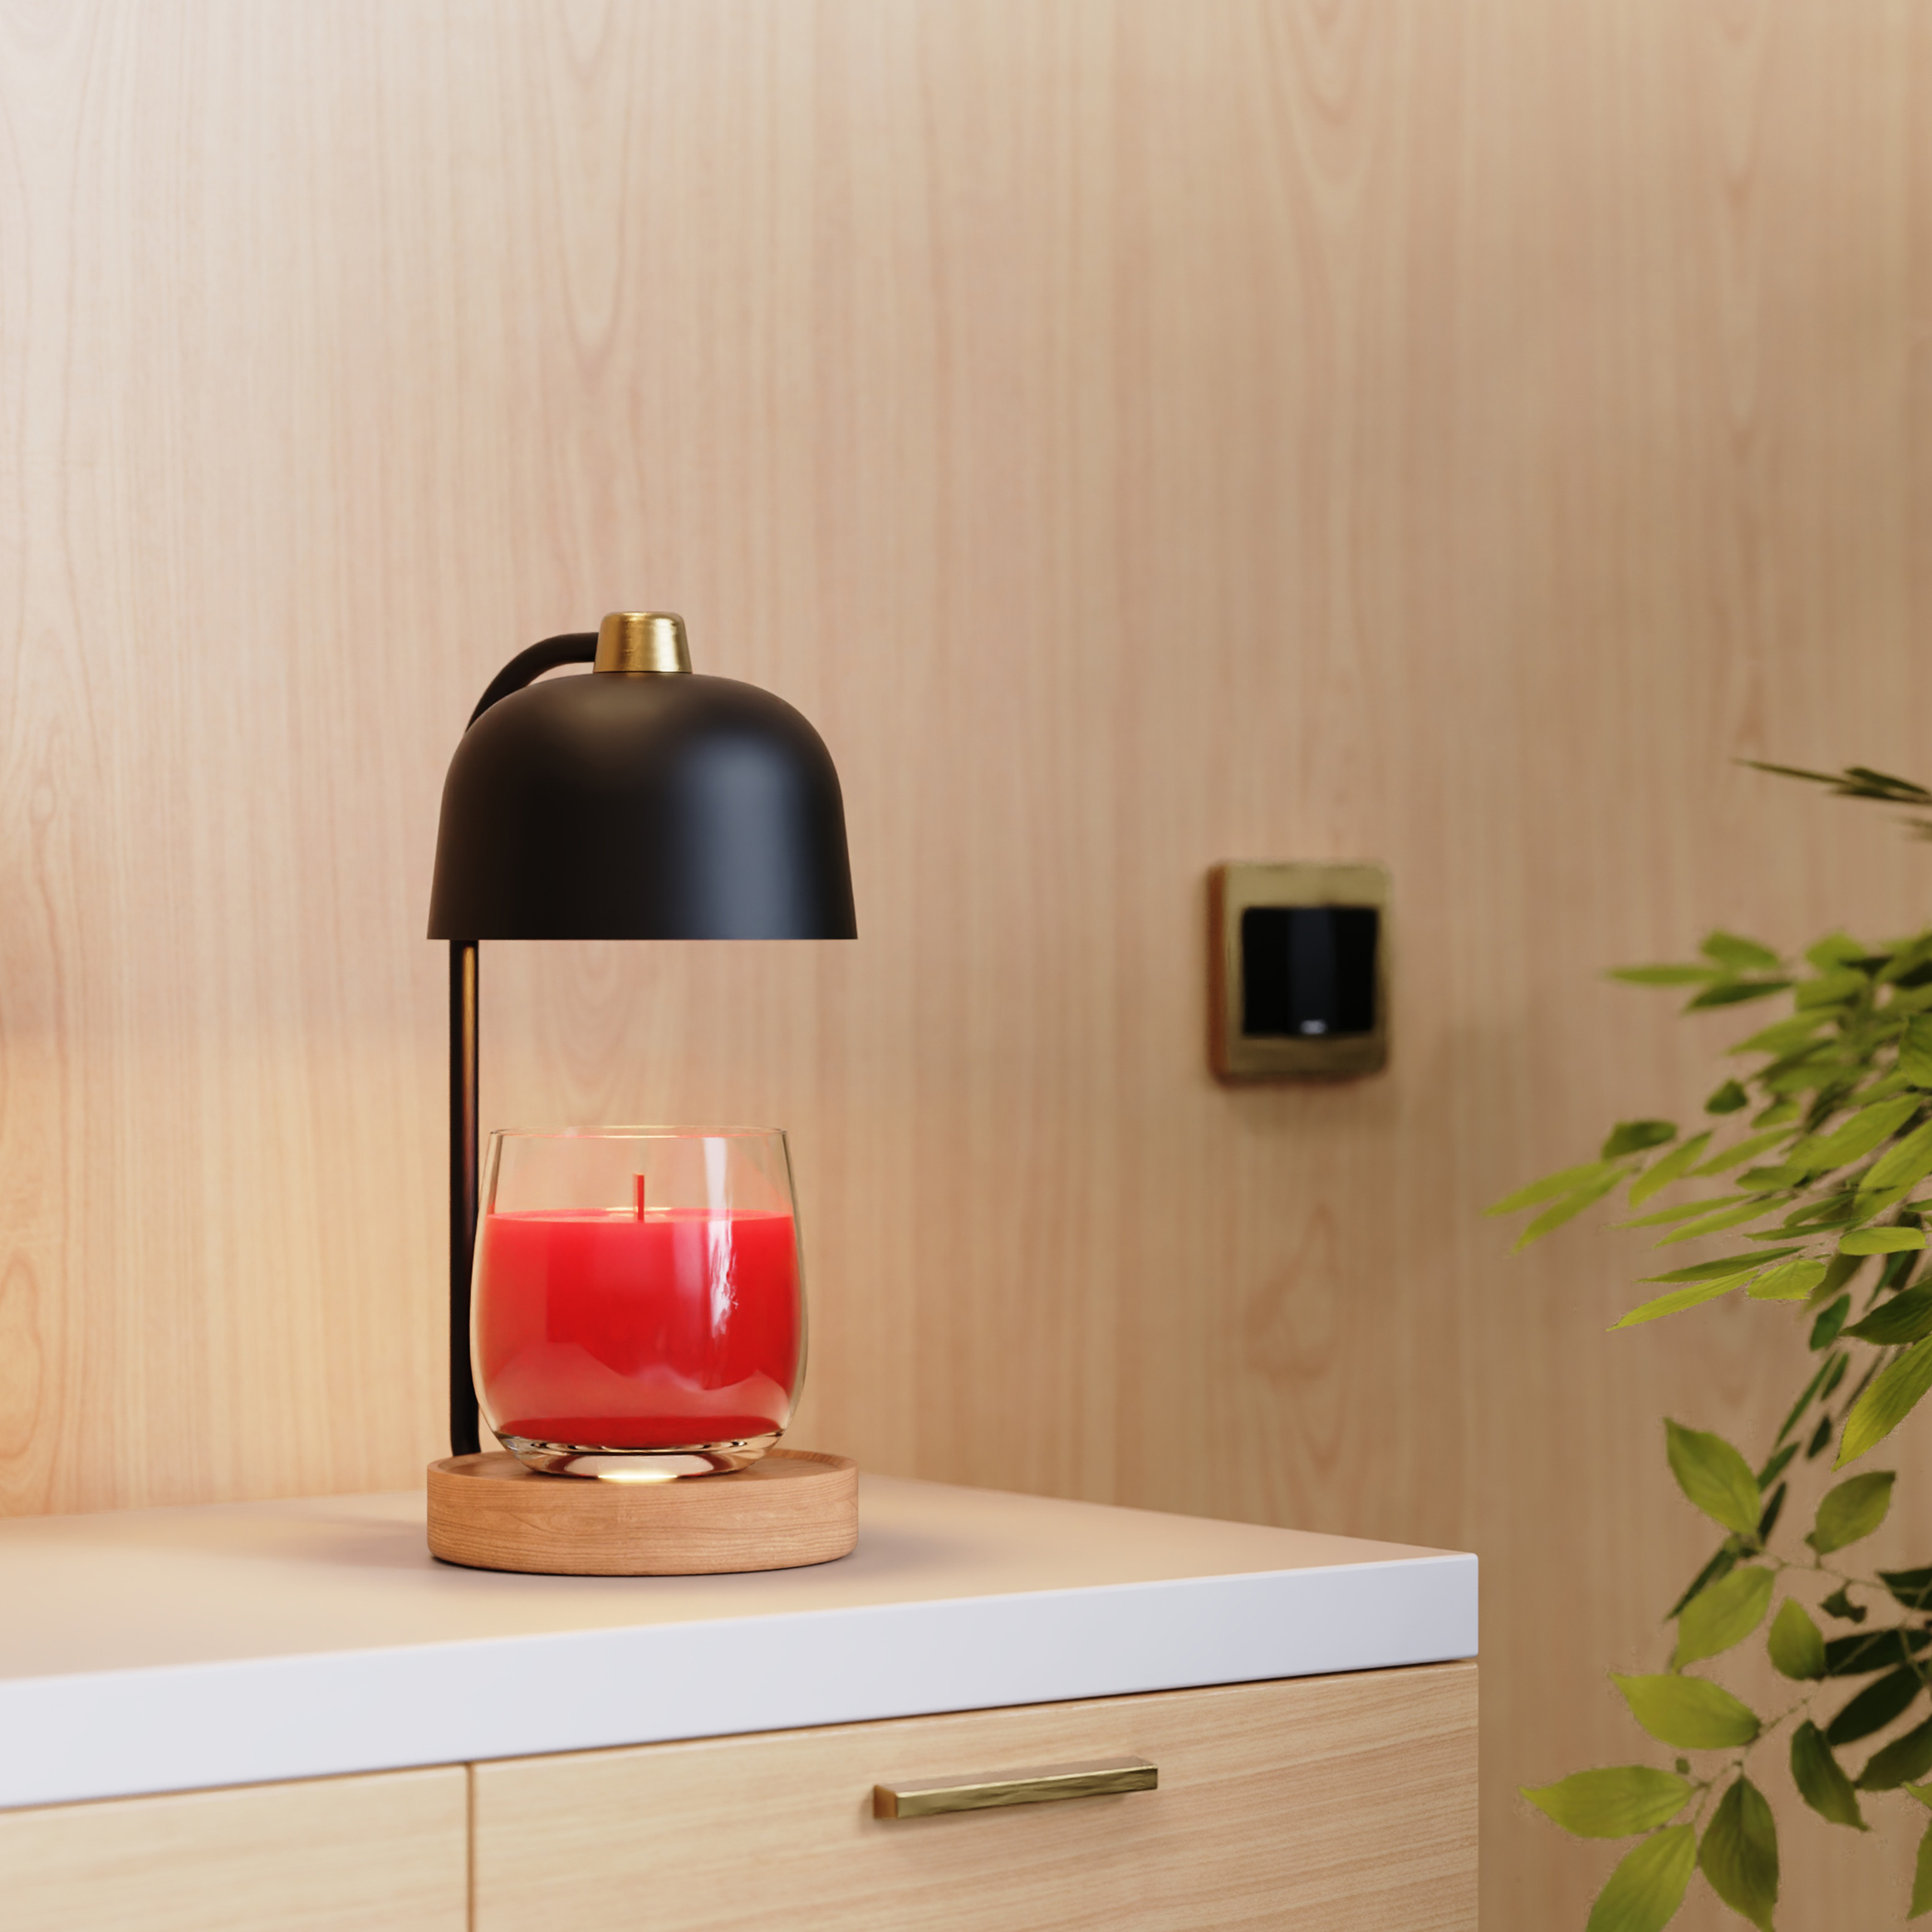 Modern Candle Warmer Lamp with Timer, Electric Candle Lamp Warmer for Jar Candles, ຂອງຂວັນວັນເກີດສໍາລັບແມ່ຍິງ Mom Her, ໂຄມໄຟທຽນໂລຫະທີ່ສາມາດປັບໄດ້ Dimmable, ແນວຄວາມຄິດຂອງຂວັນແມ່ຍິງ, ອອກແບບເຮືອນສໍາລັບຫ້ອງນອນ